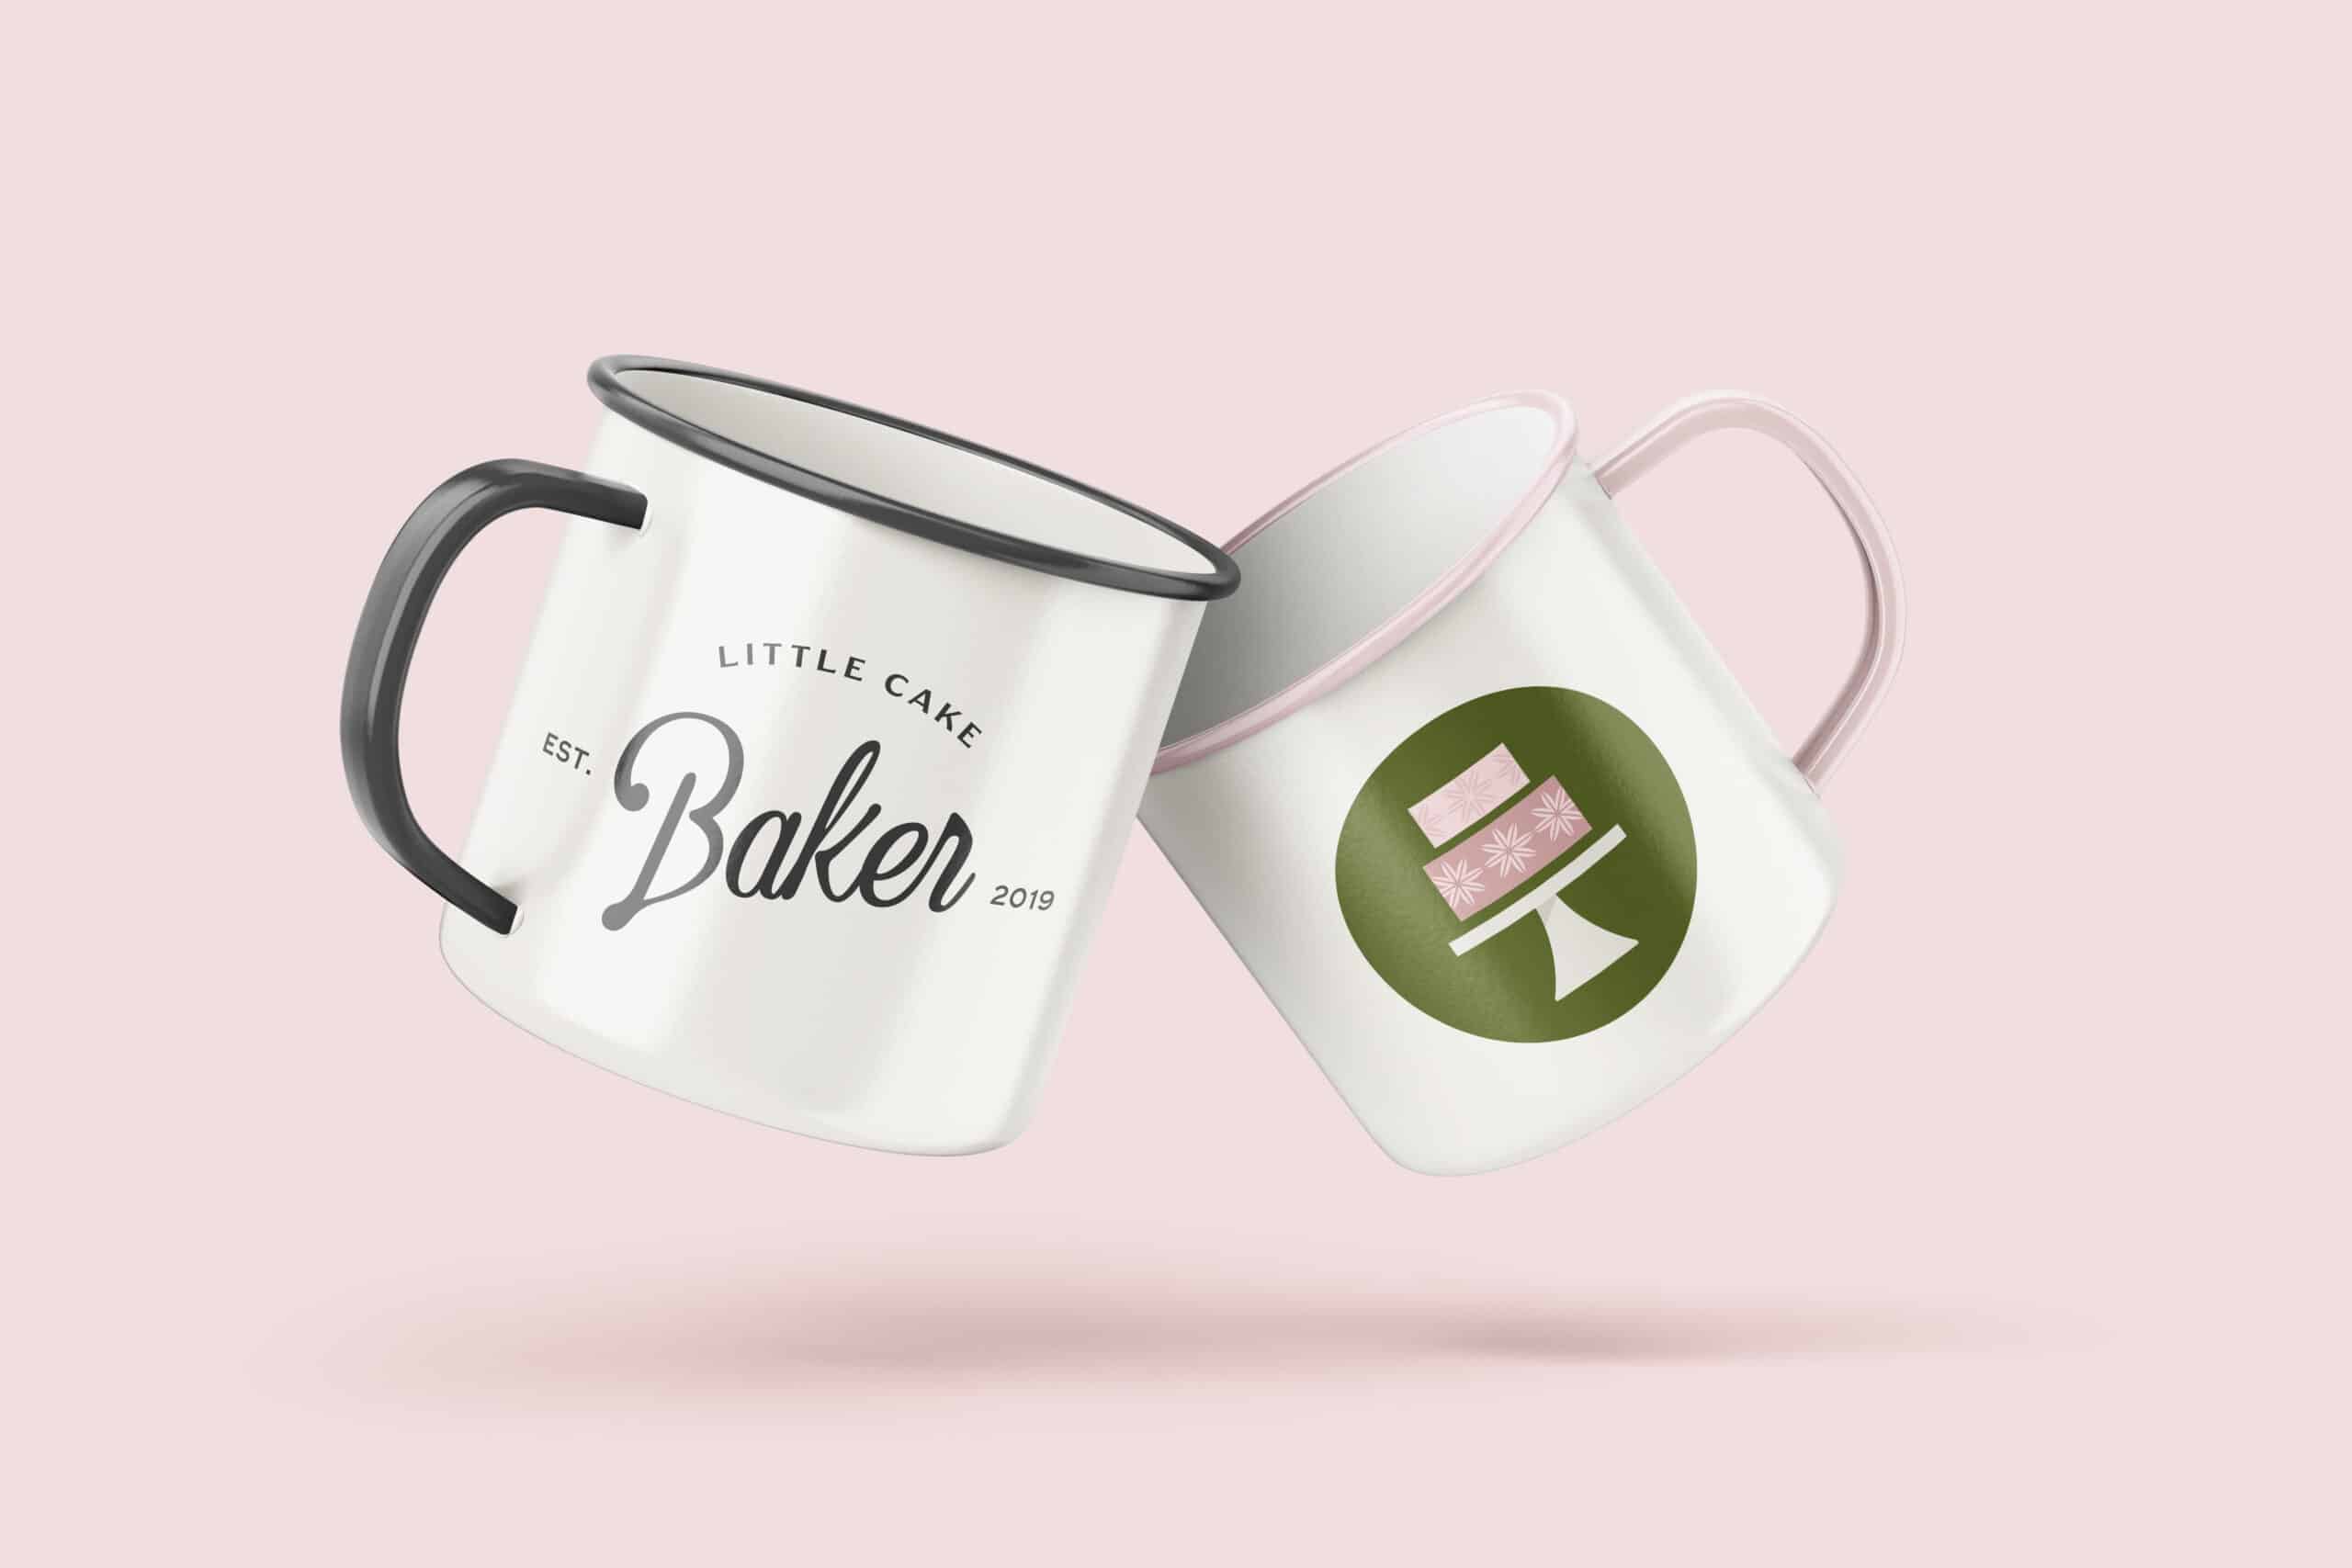 Mug Design for Little Cake Baker Brittany Lombardi by Stellen Design branding agency and Logo design firm in Los Angeles California